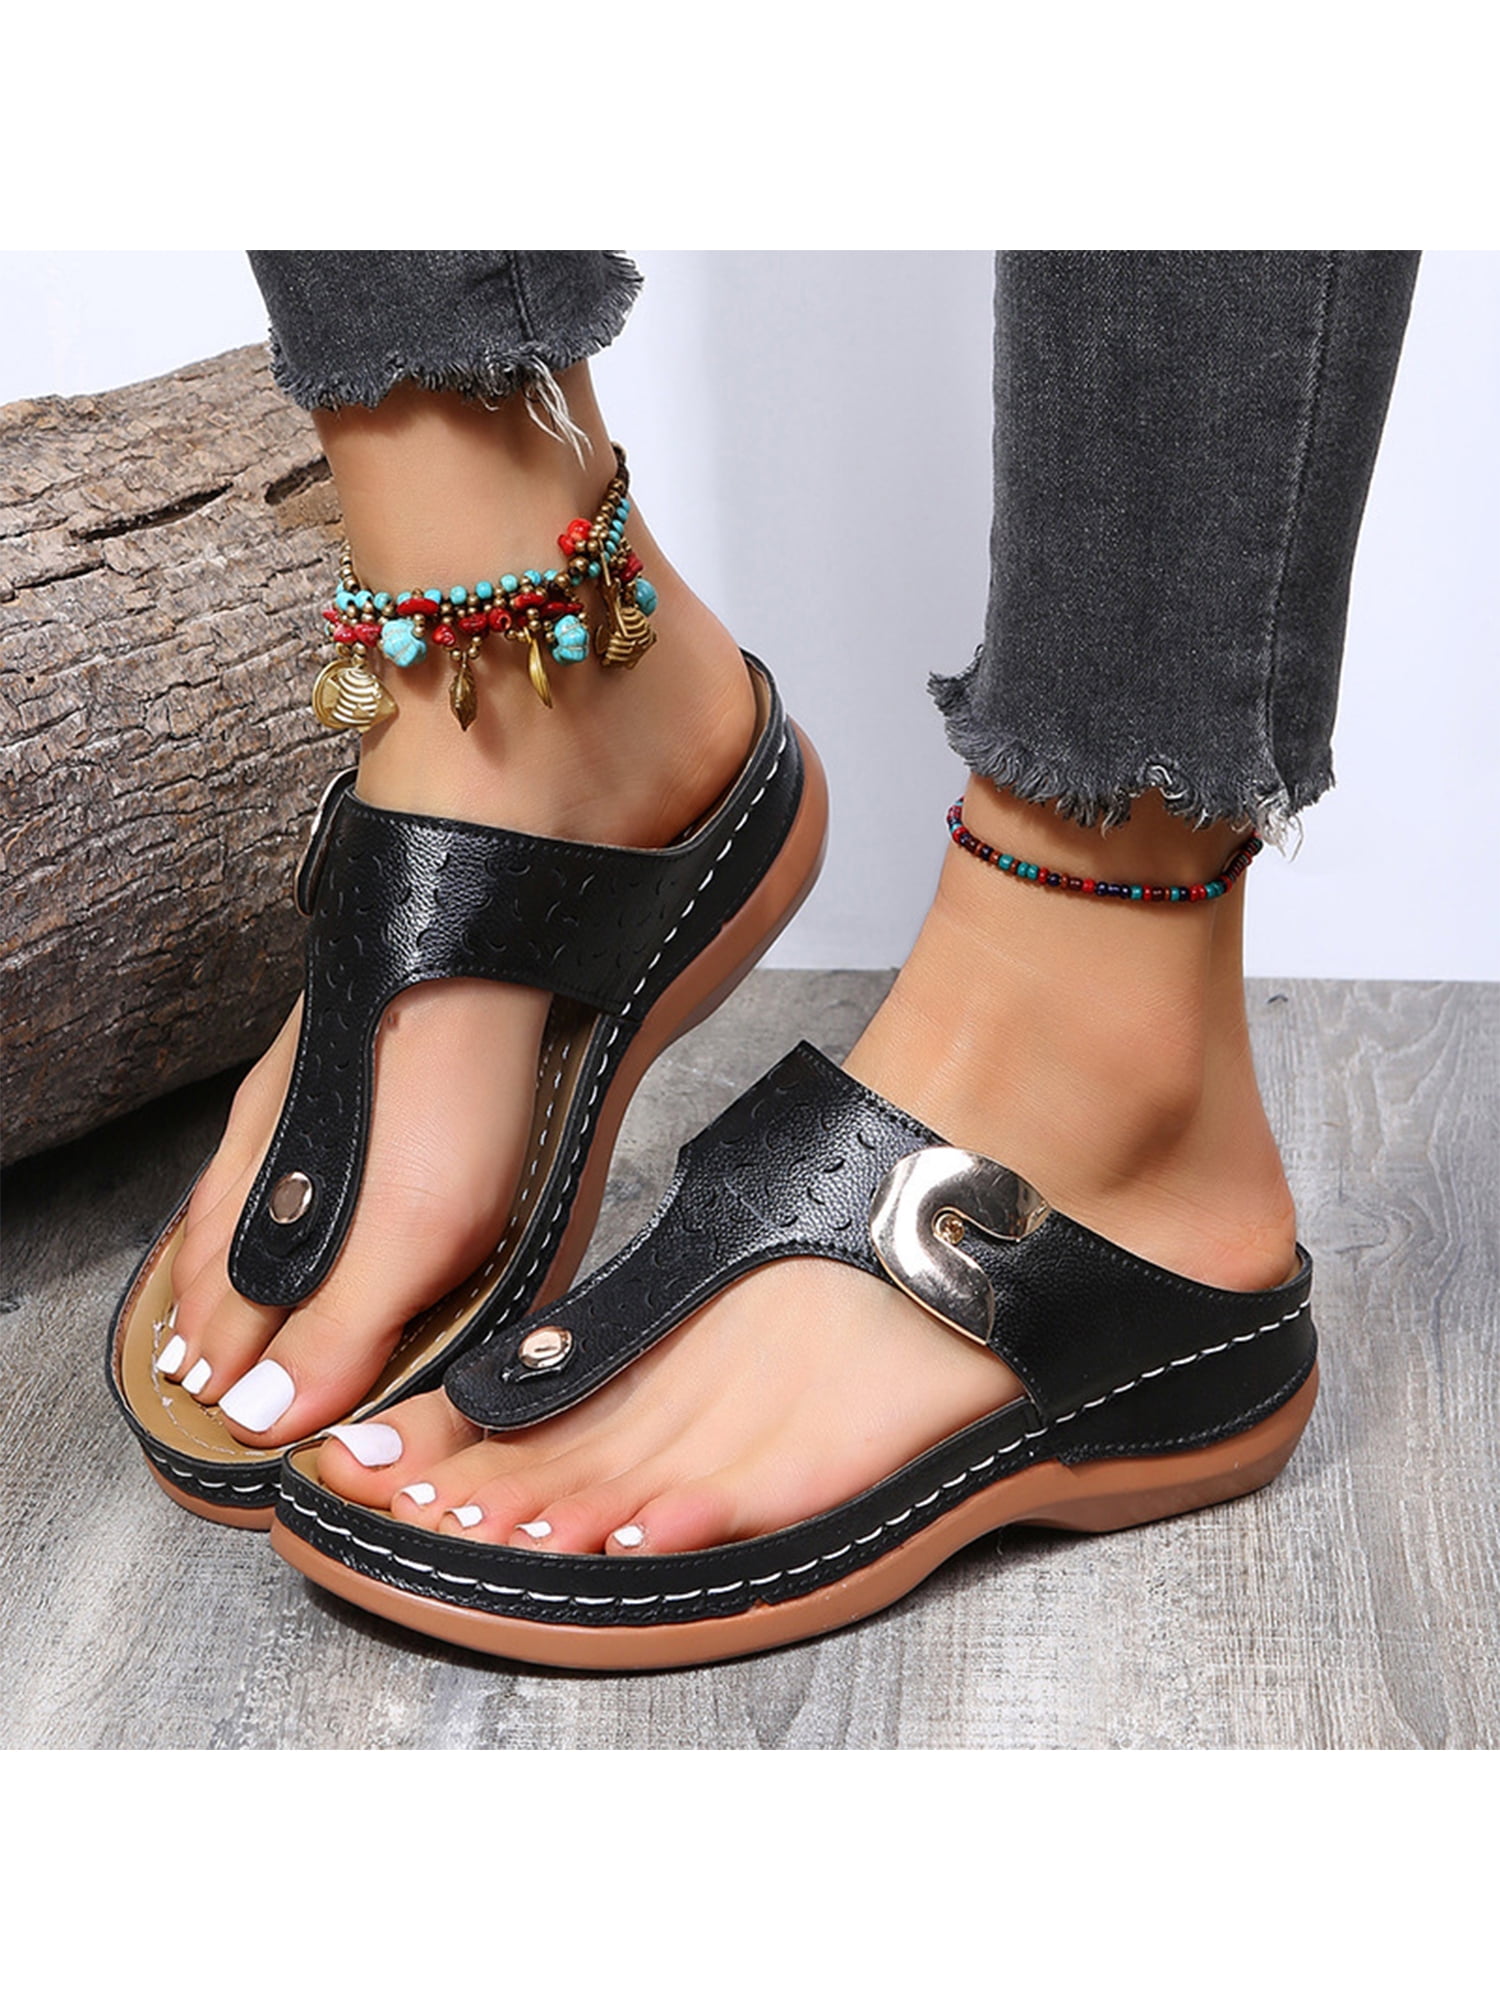 Women Orthopedic Sandals Wedge Heels T-Strap Clip Toe Slingback Summer Shoes 